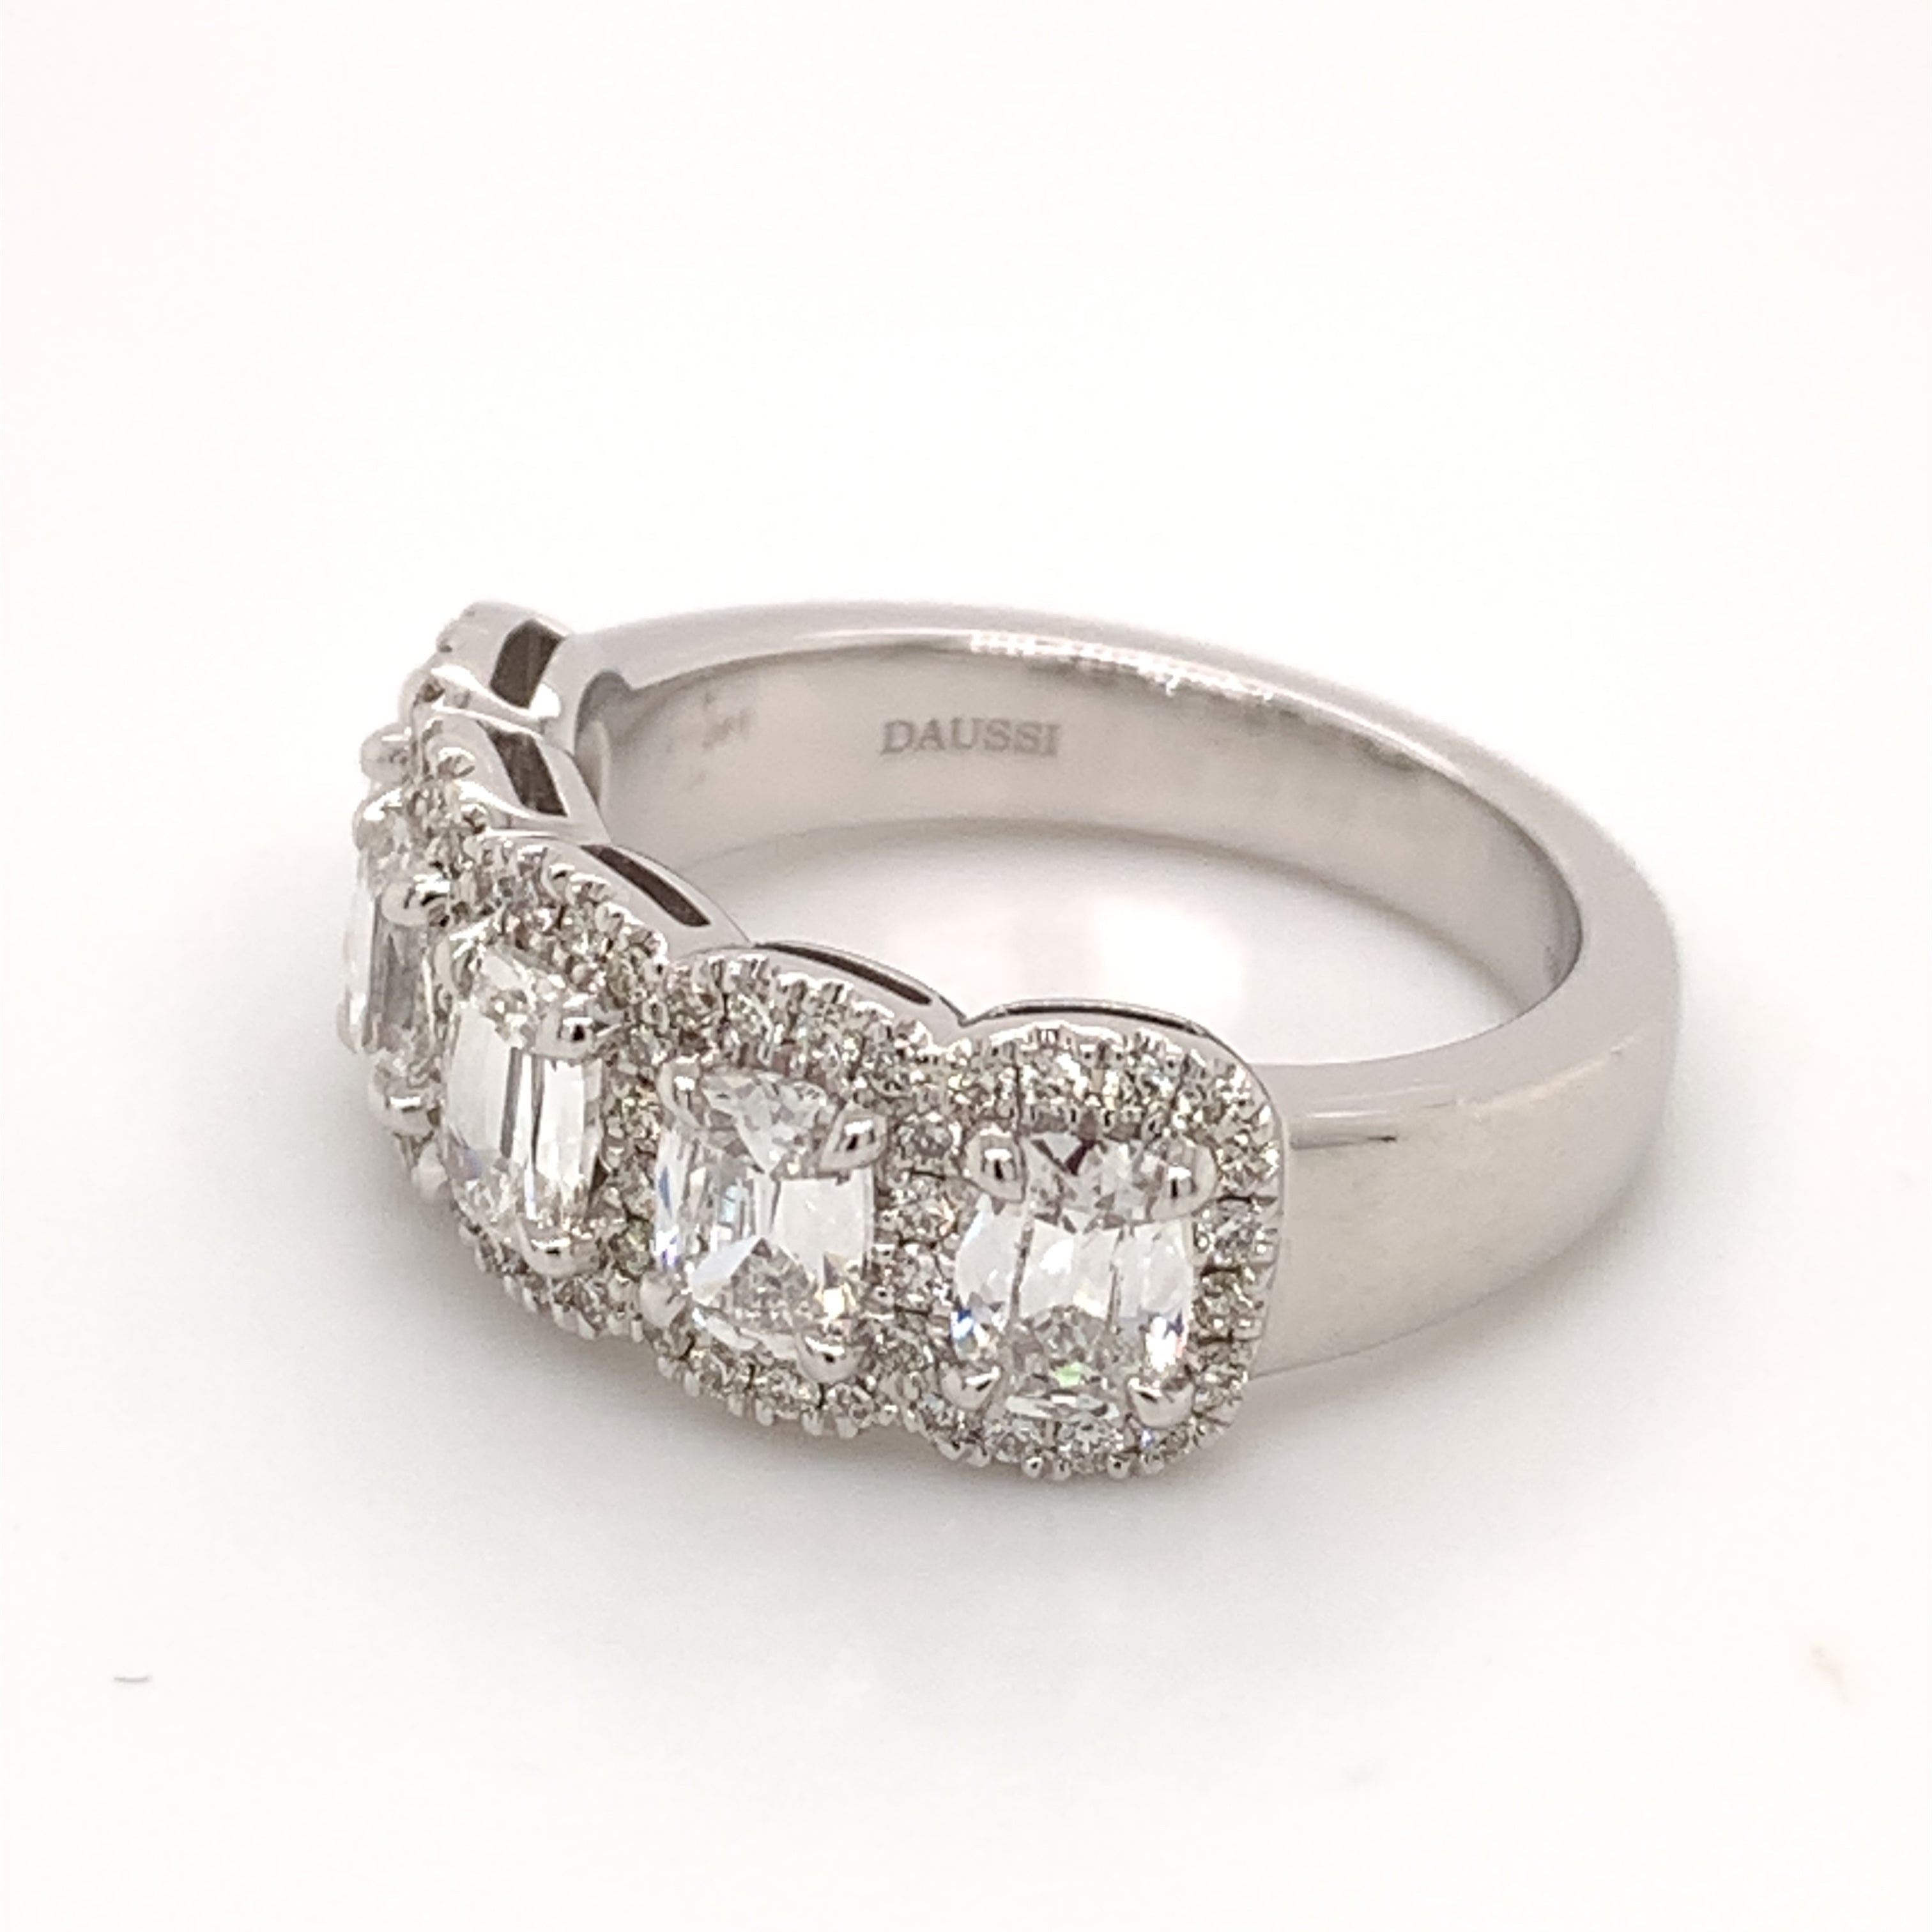 Henri Daussi Cushion Cut Five Stone 1.77ctw Diamond Ring